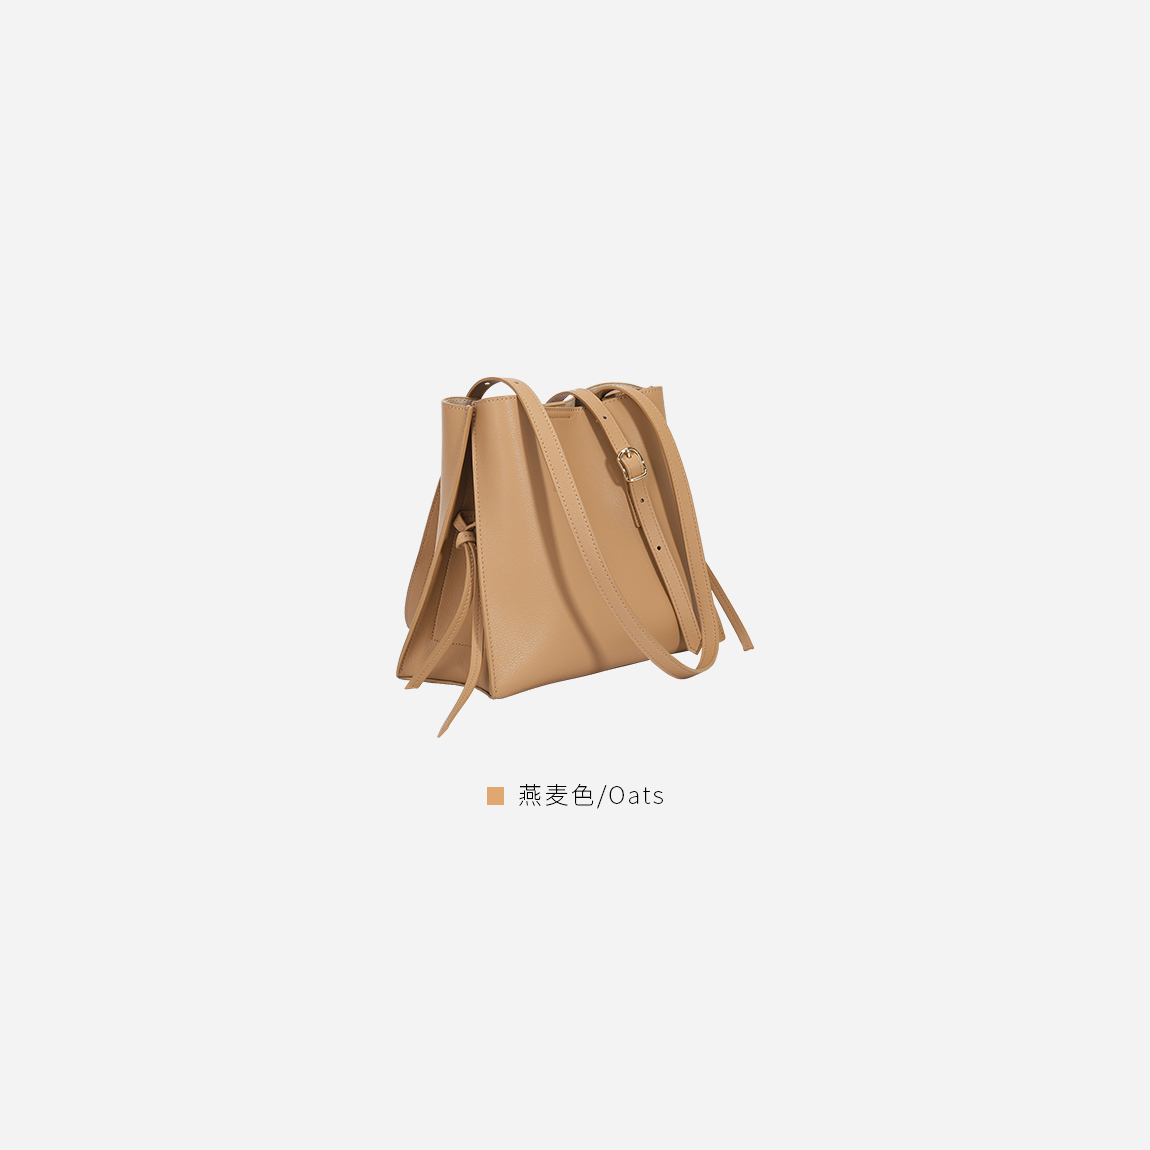 Leather shoulder bag tote bags